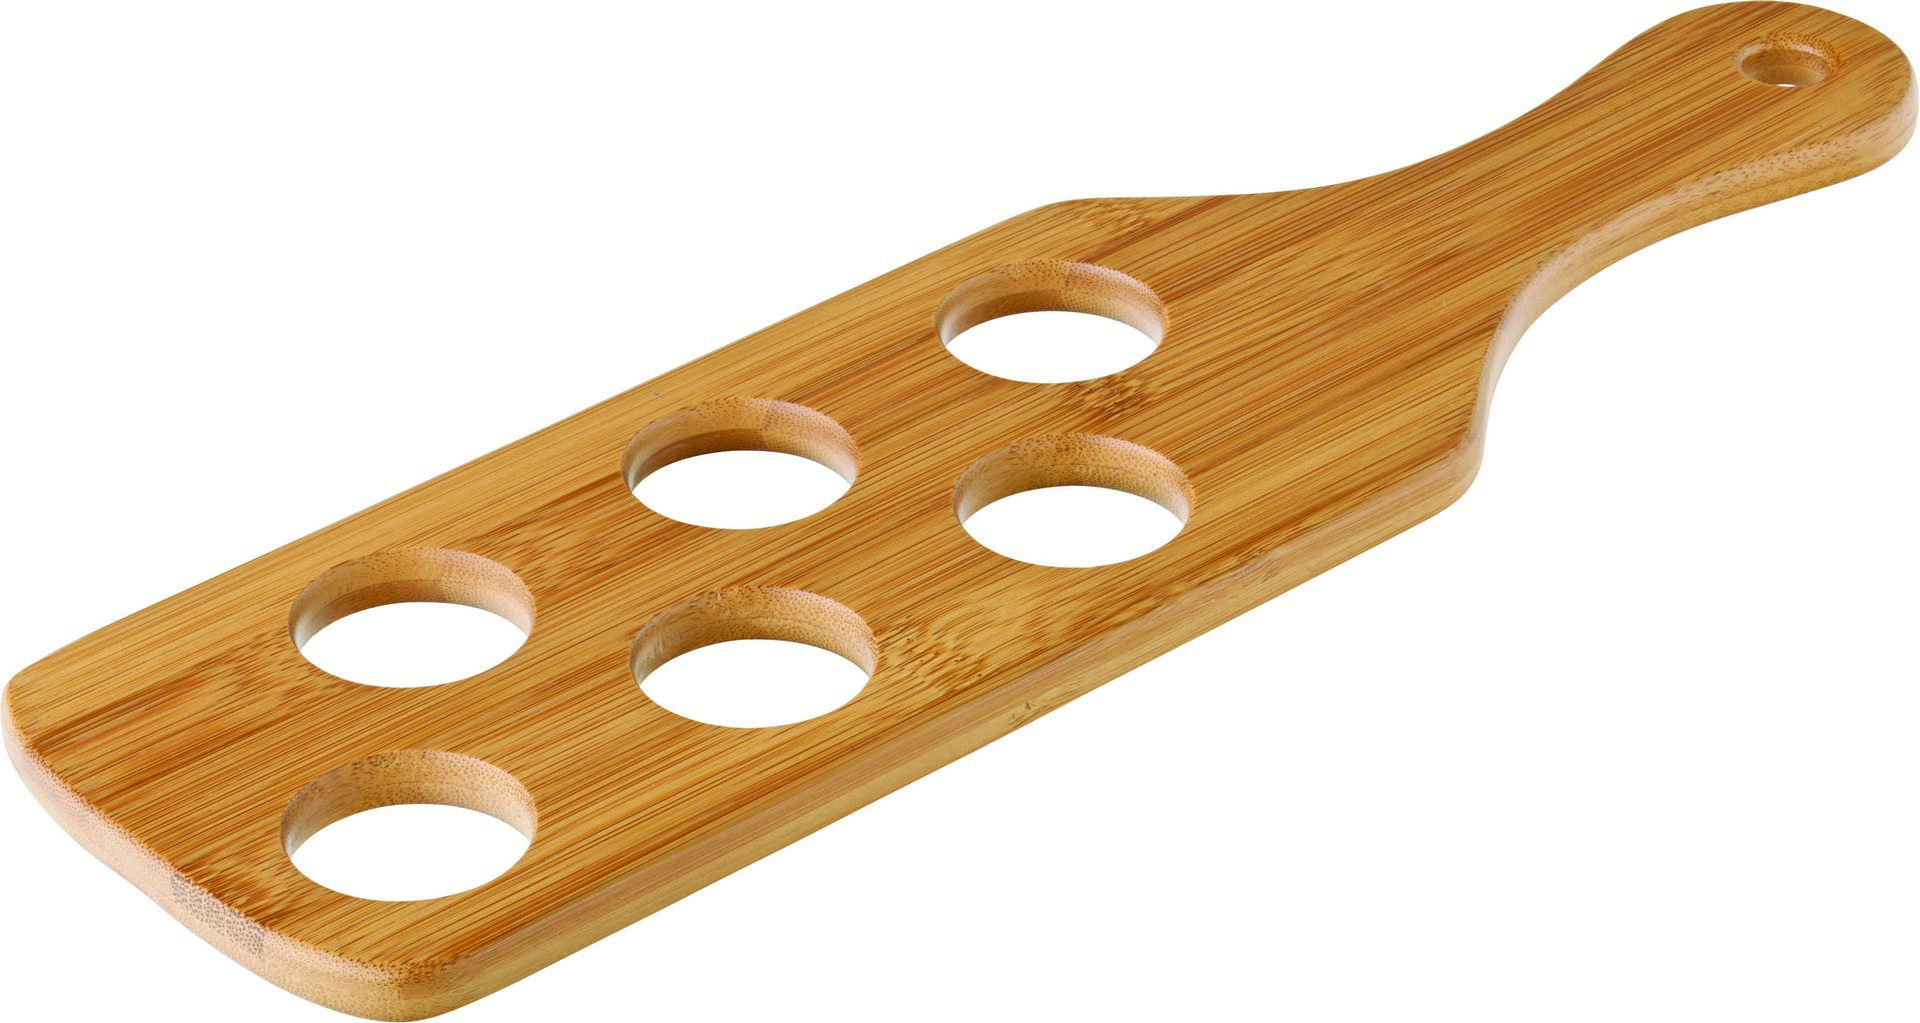 Bamboo Shot Paddle - To hold 6 Shots 15 x 4.25